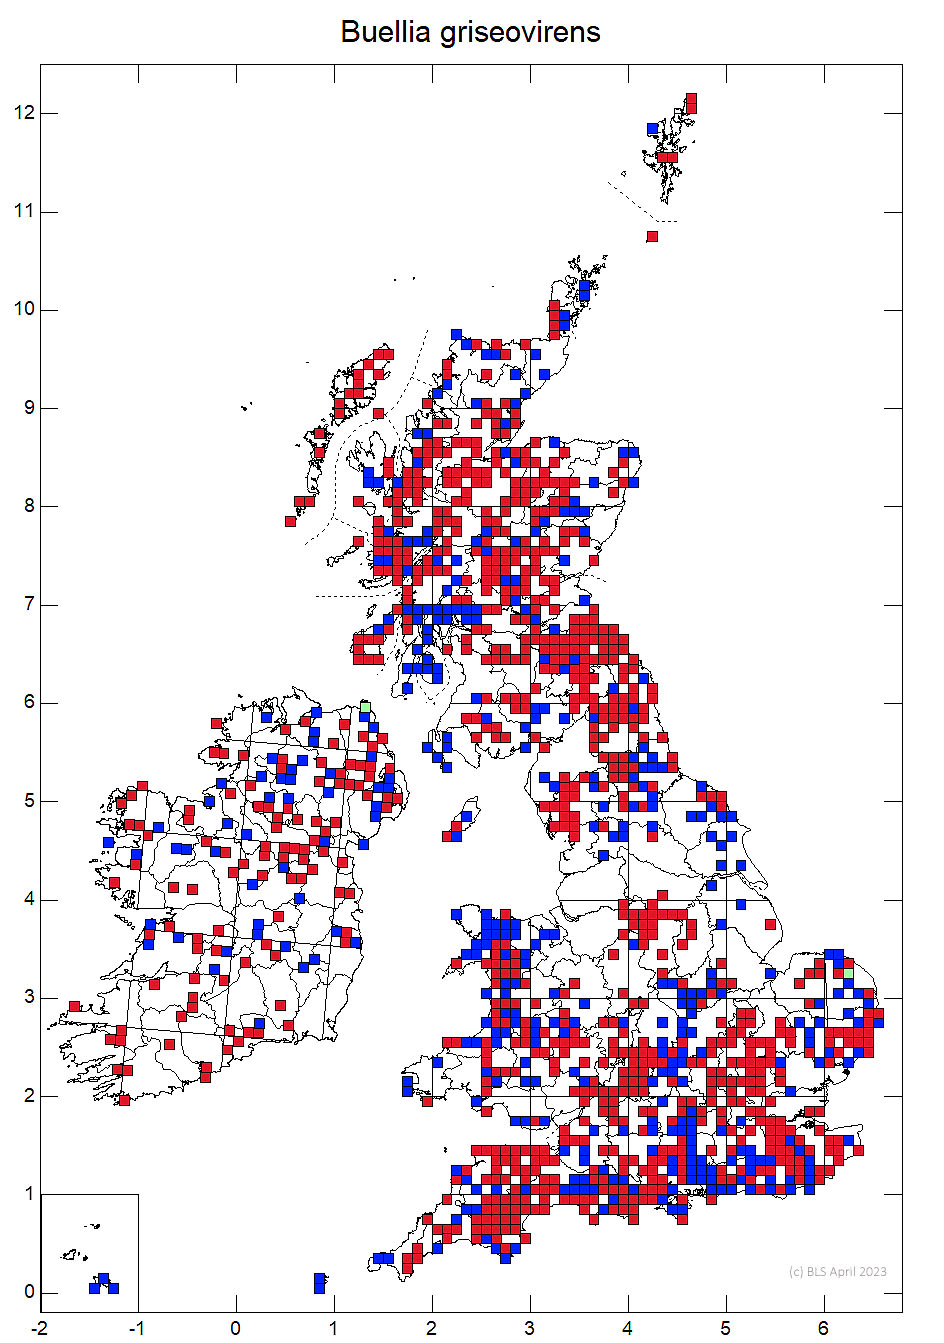 Buellia griseovirens 10km sq distribution map